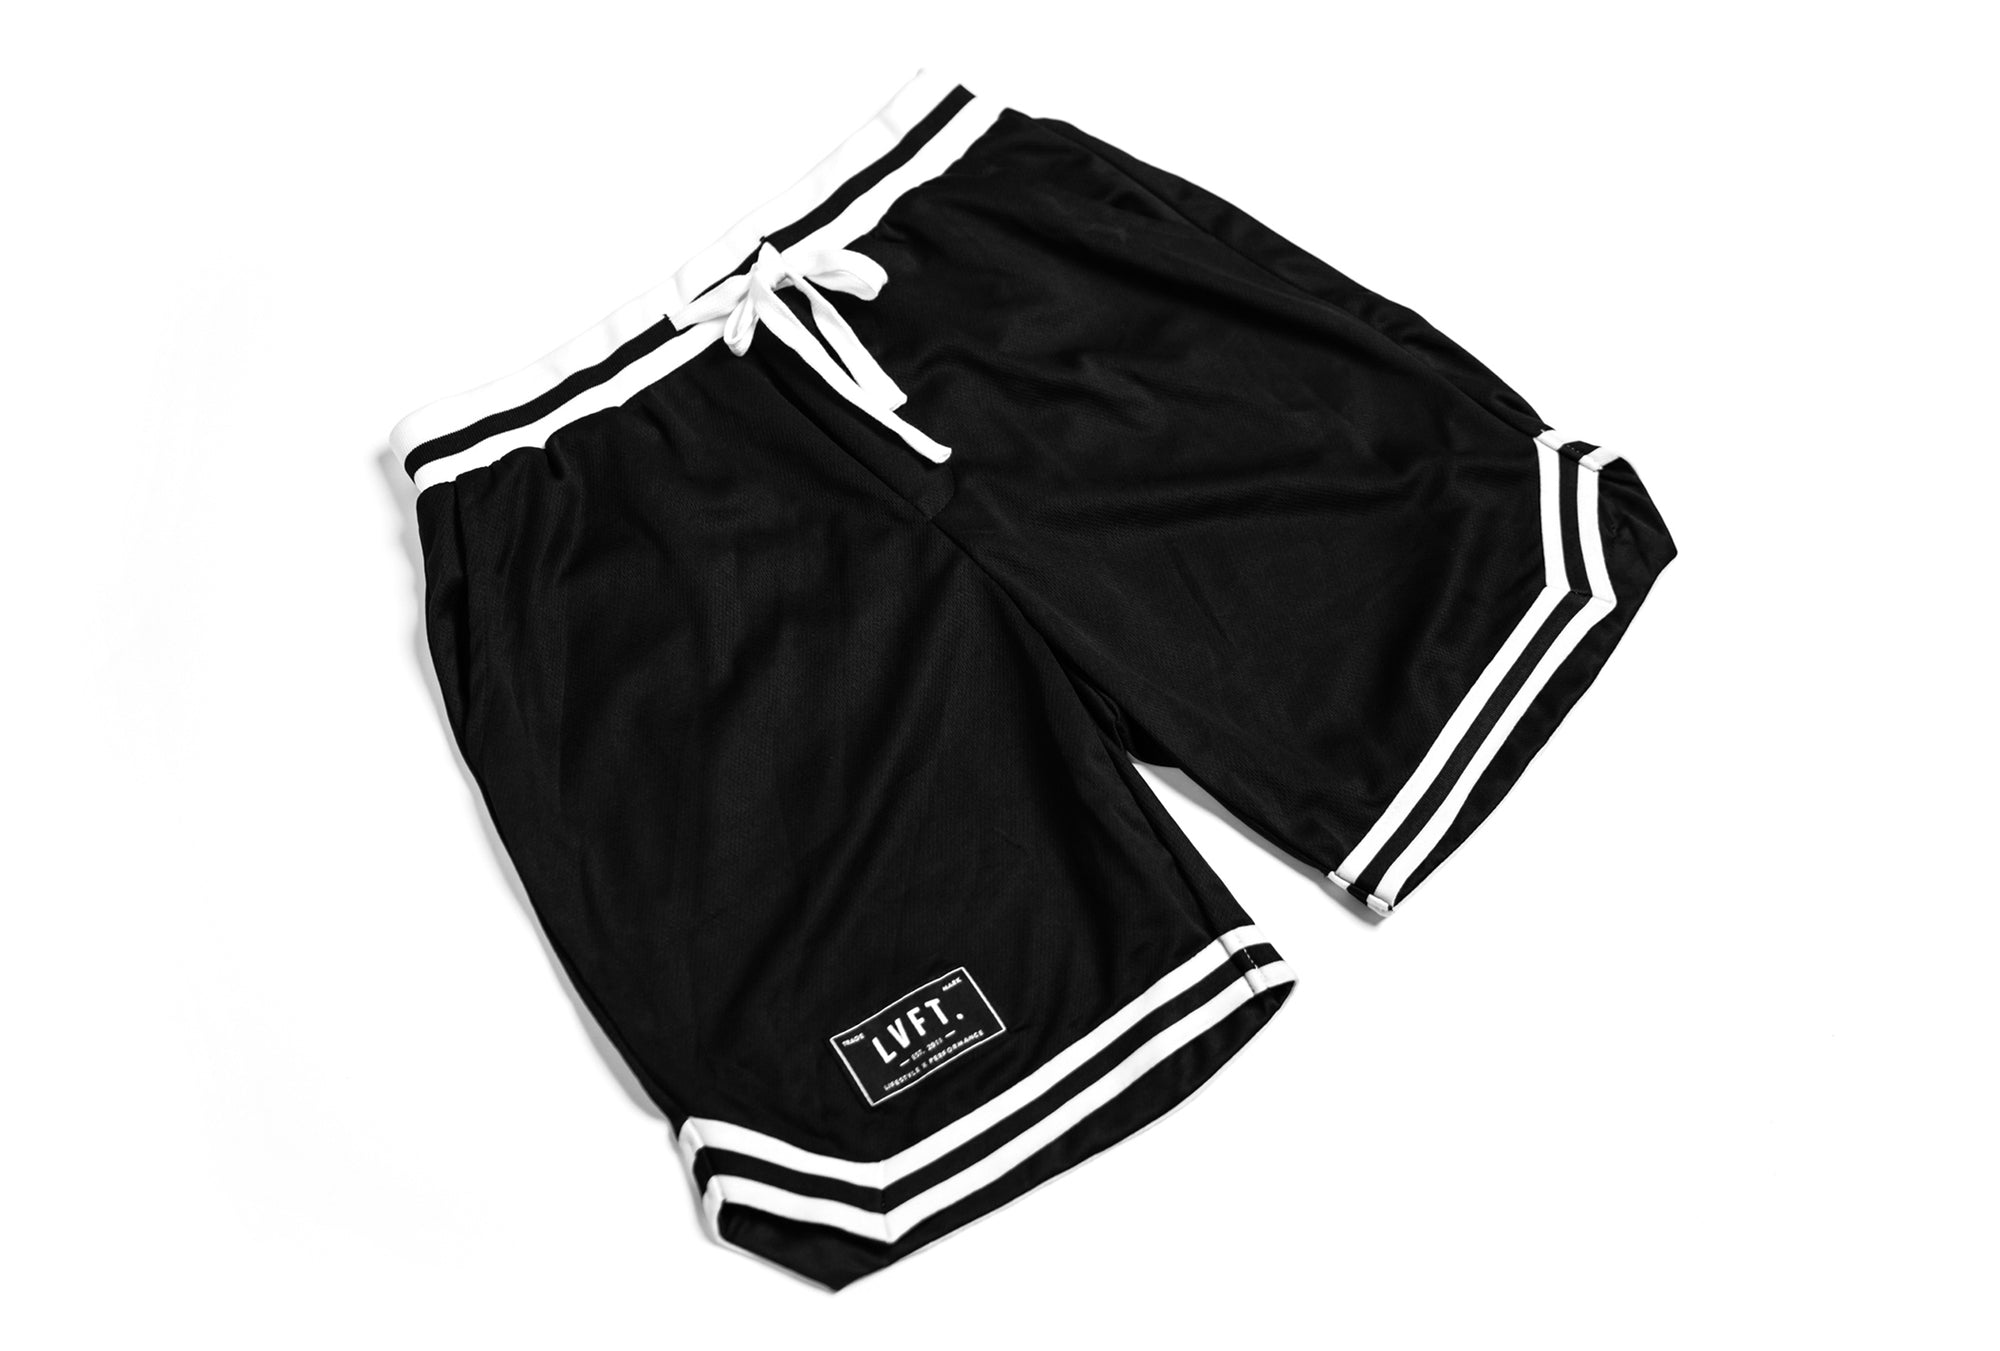 Retro Court Side Shorts - Black - Live Fit. Apparel